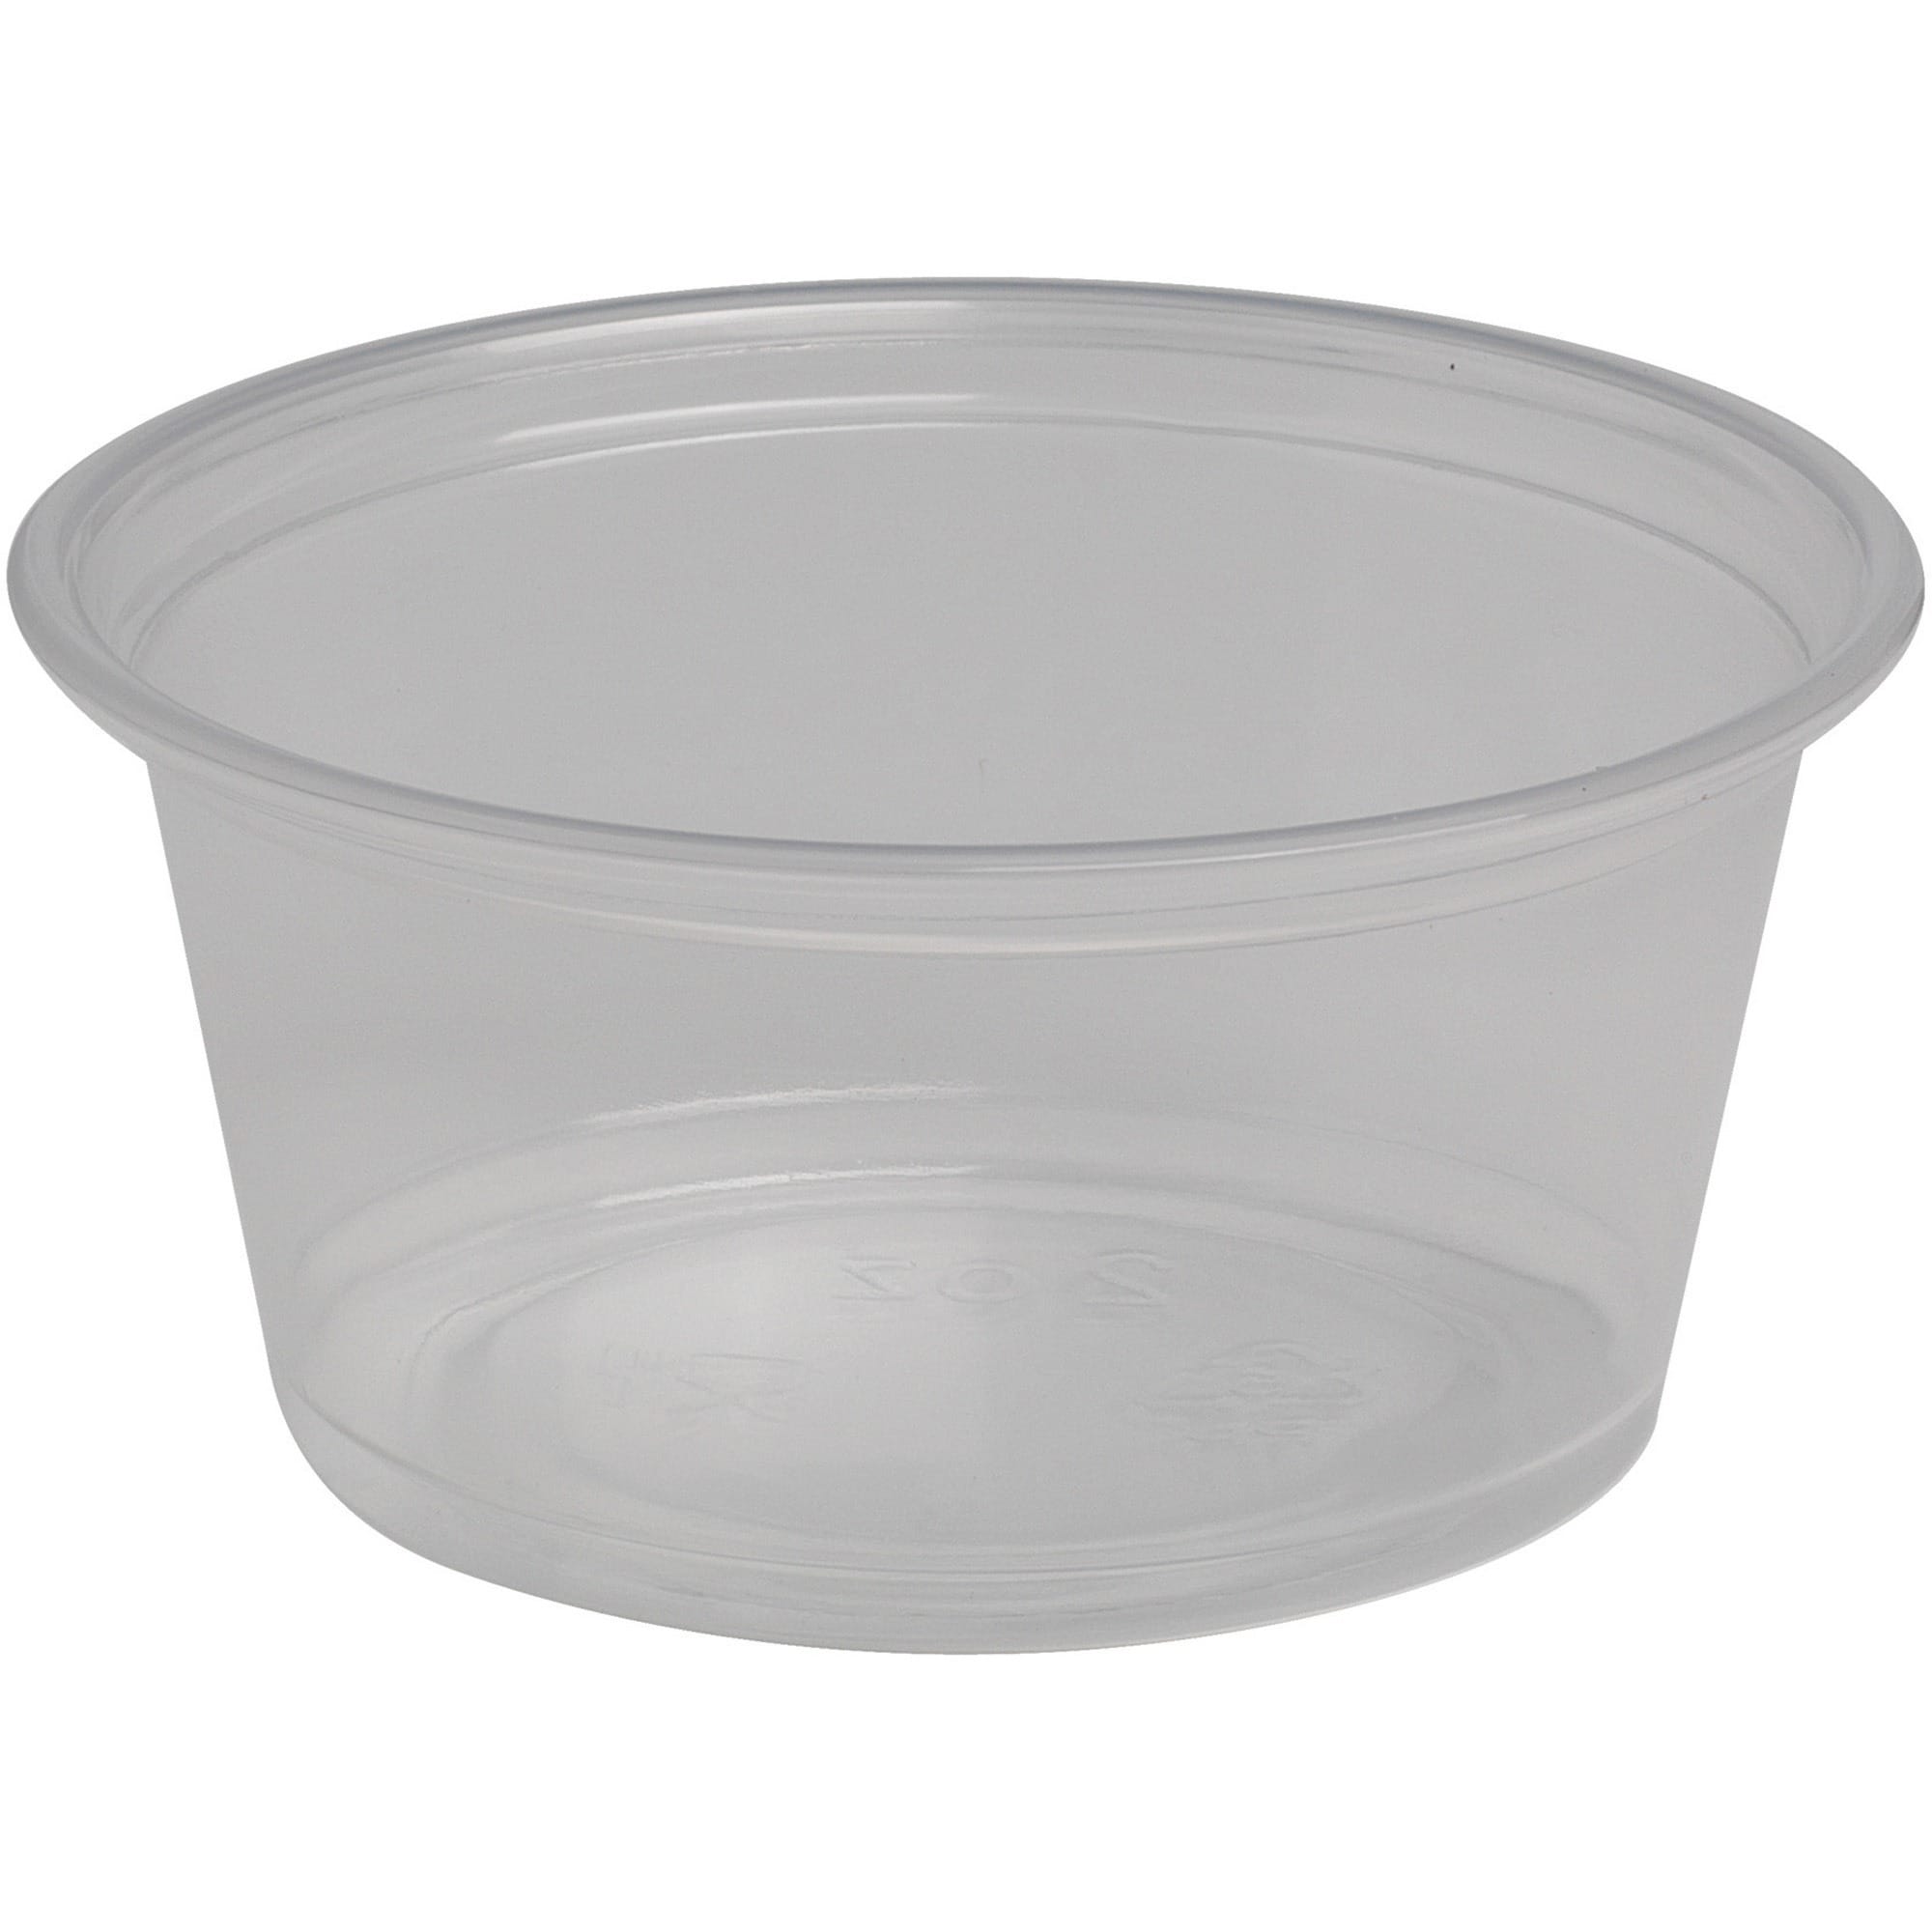 2 oz. Disposable Colored Foil Cup with Plastic Lid #A3P